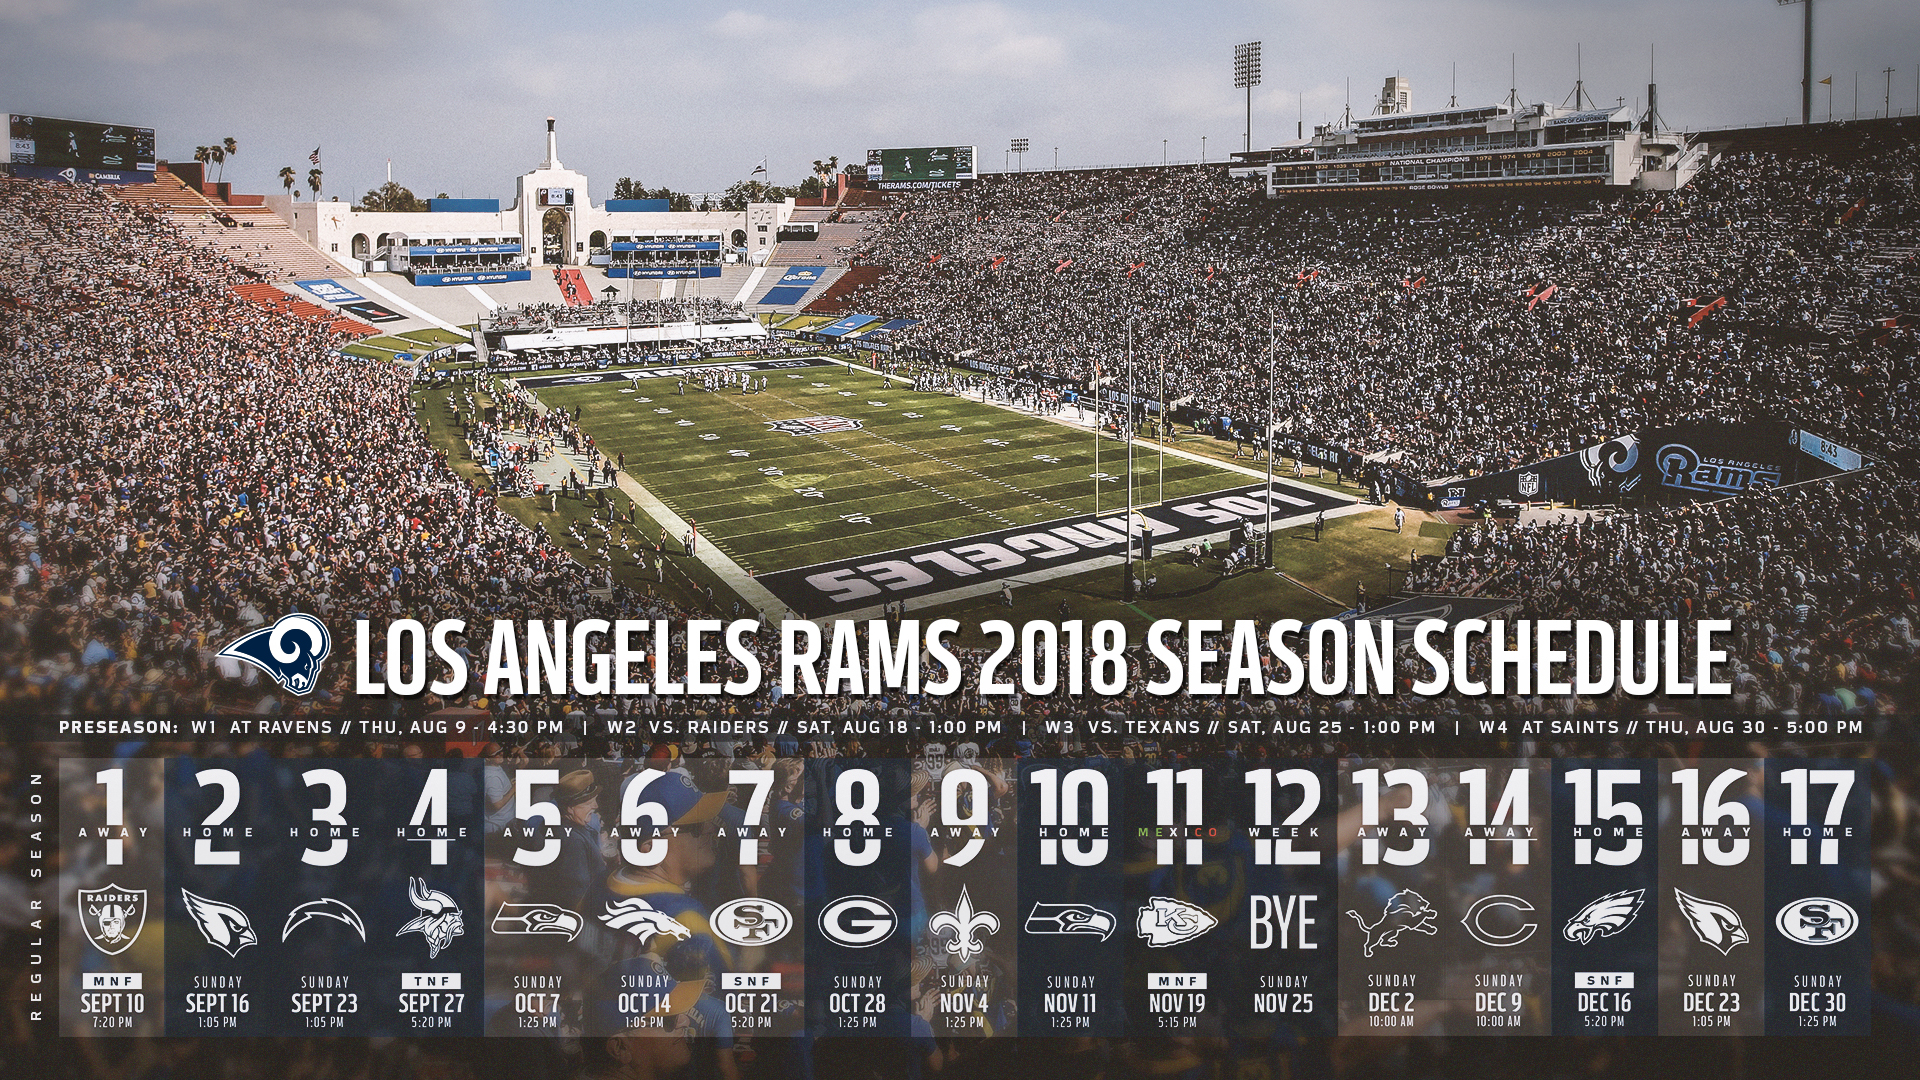 2018 Schedule Desktopbg - Soccer-specific Stadium - HD Wallpaper 